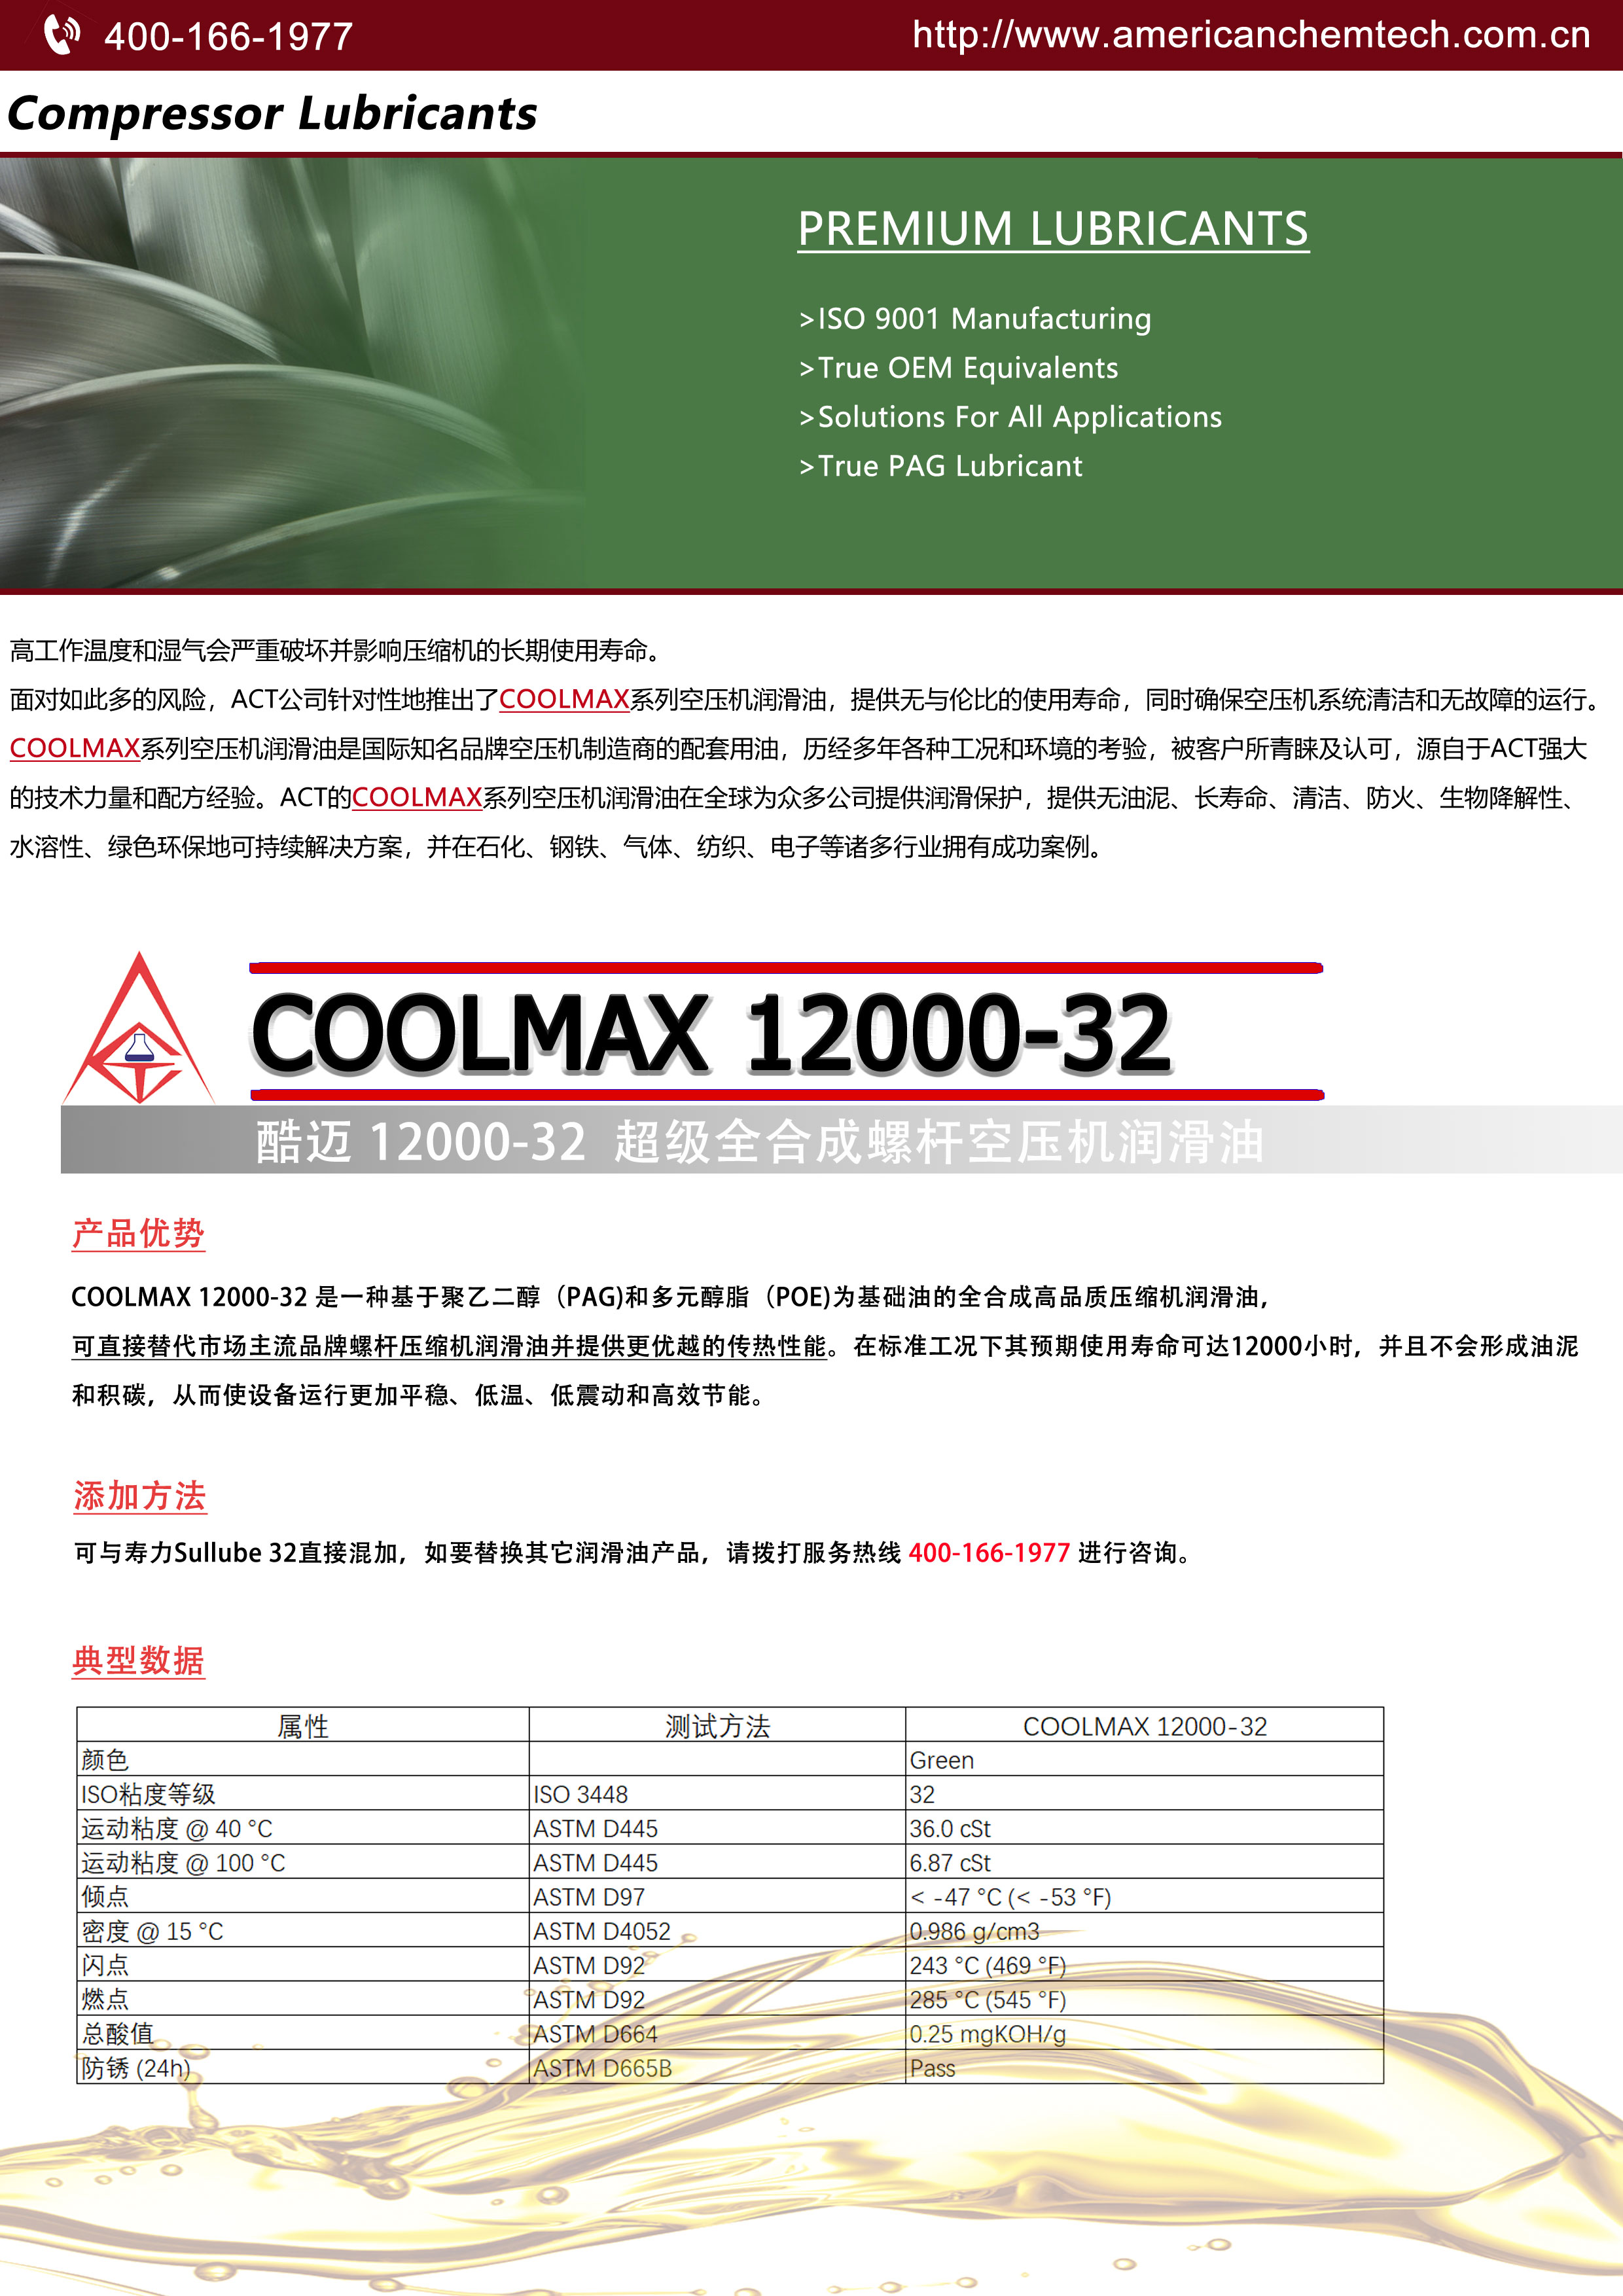 05-ACT-CHINA-COOLMAX-12000-32.jpg